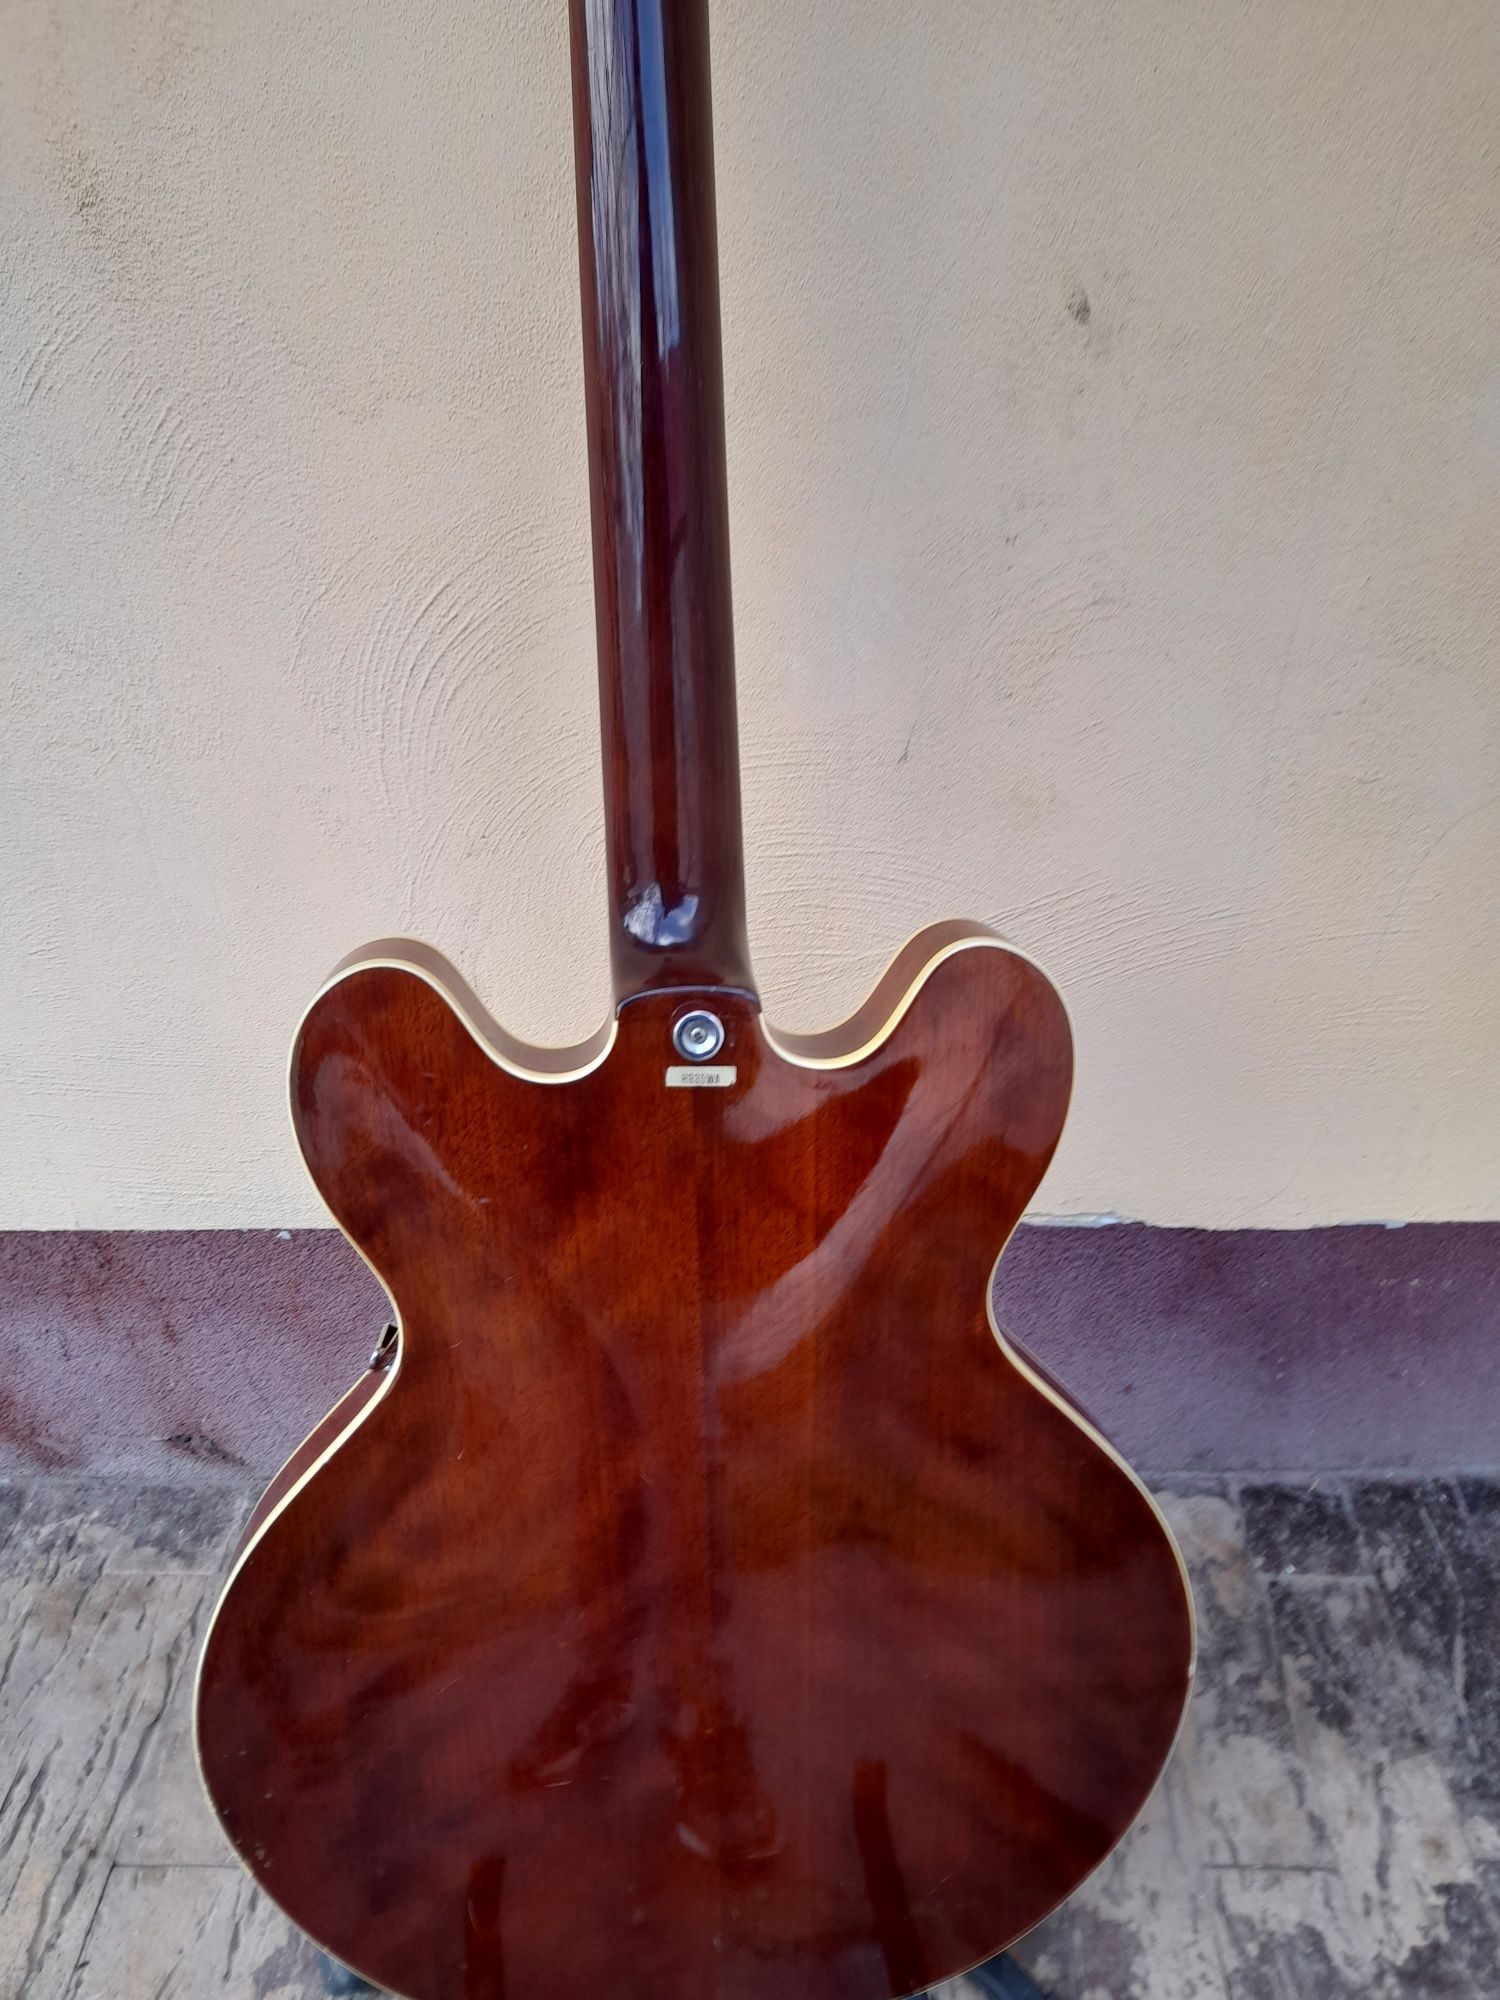 chitara semi hollow Hondo Revival H-935